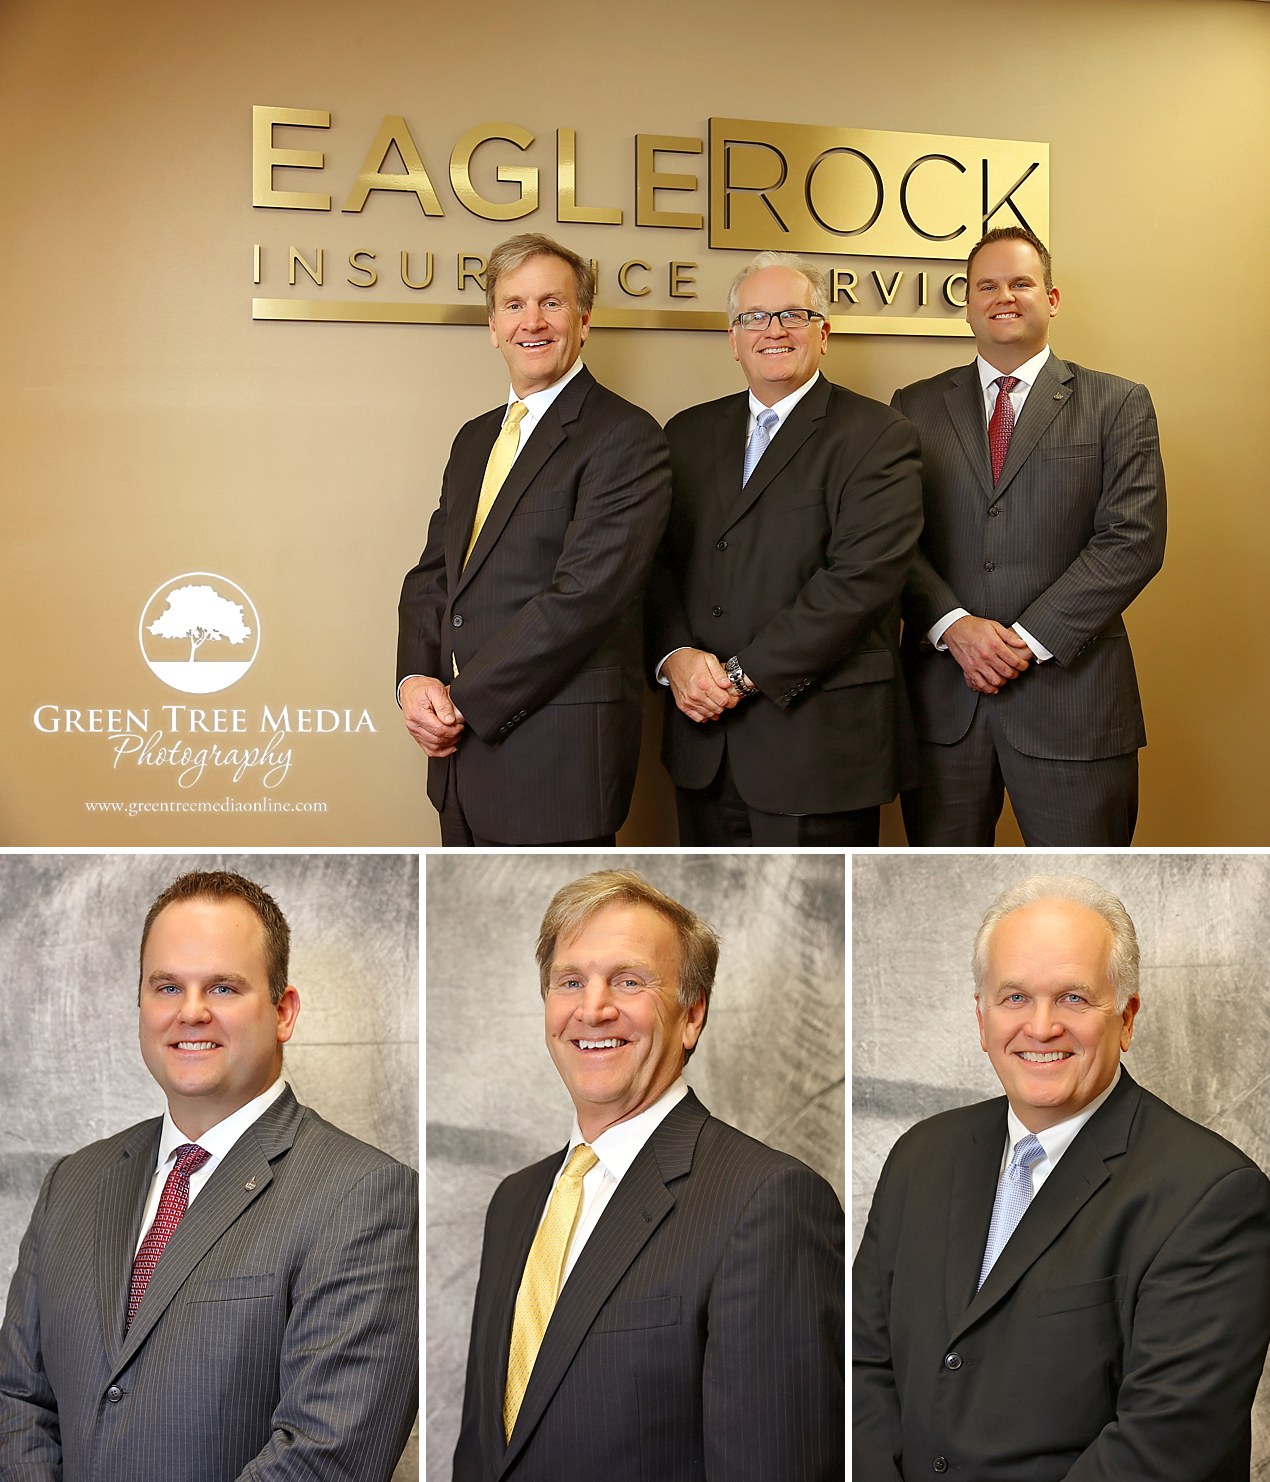 Eagle Rock Insurance Service